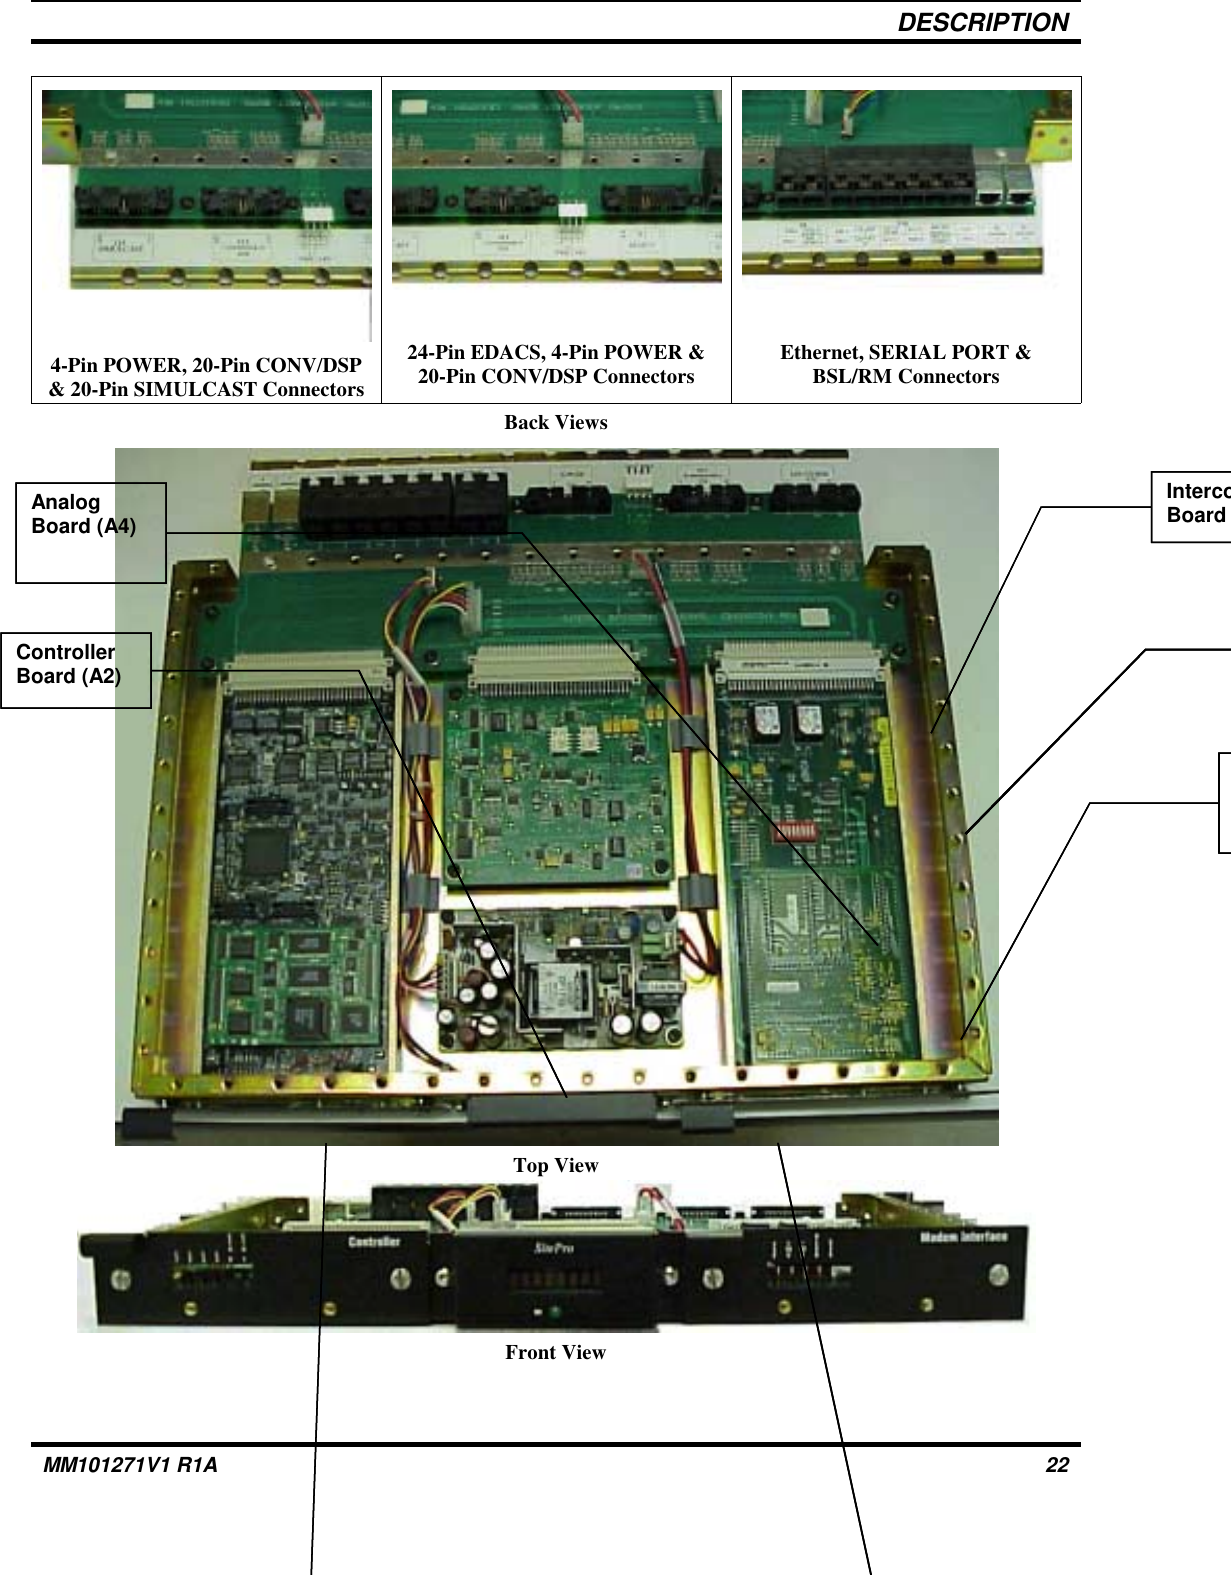 DESCRIPTION4-Pin POWER, 20-Pin CONV/DSP&amp; 20-Pin SIMULCAST Connectors24-Pin EDACS, 4-Pin POWER &amp;20-Pin CONV/DSP Connectors Ethernet, SERIAL PORT &amp;BSL/RM ConnectorsBack ViewsTop ViewFront ViewMM101271V1 R1A 22IntercoBoard Analog Board (A4)Controller Board (A2)